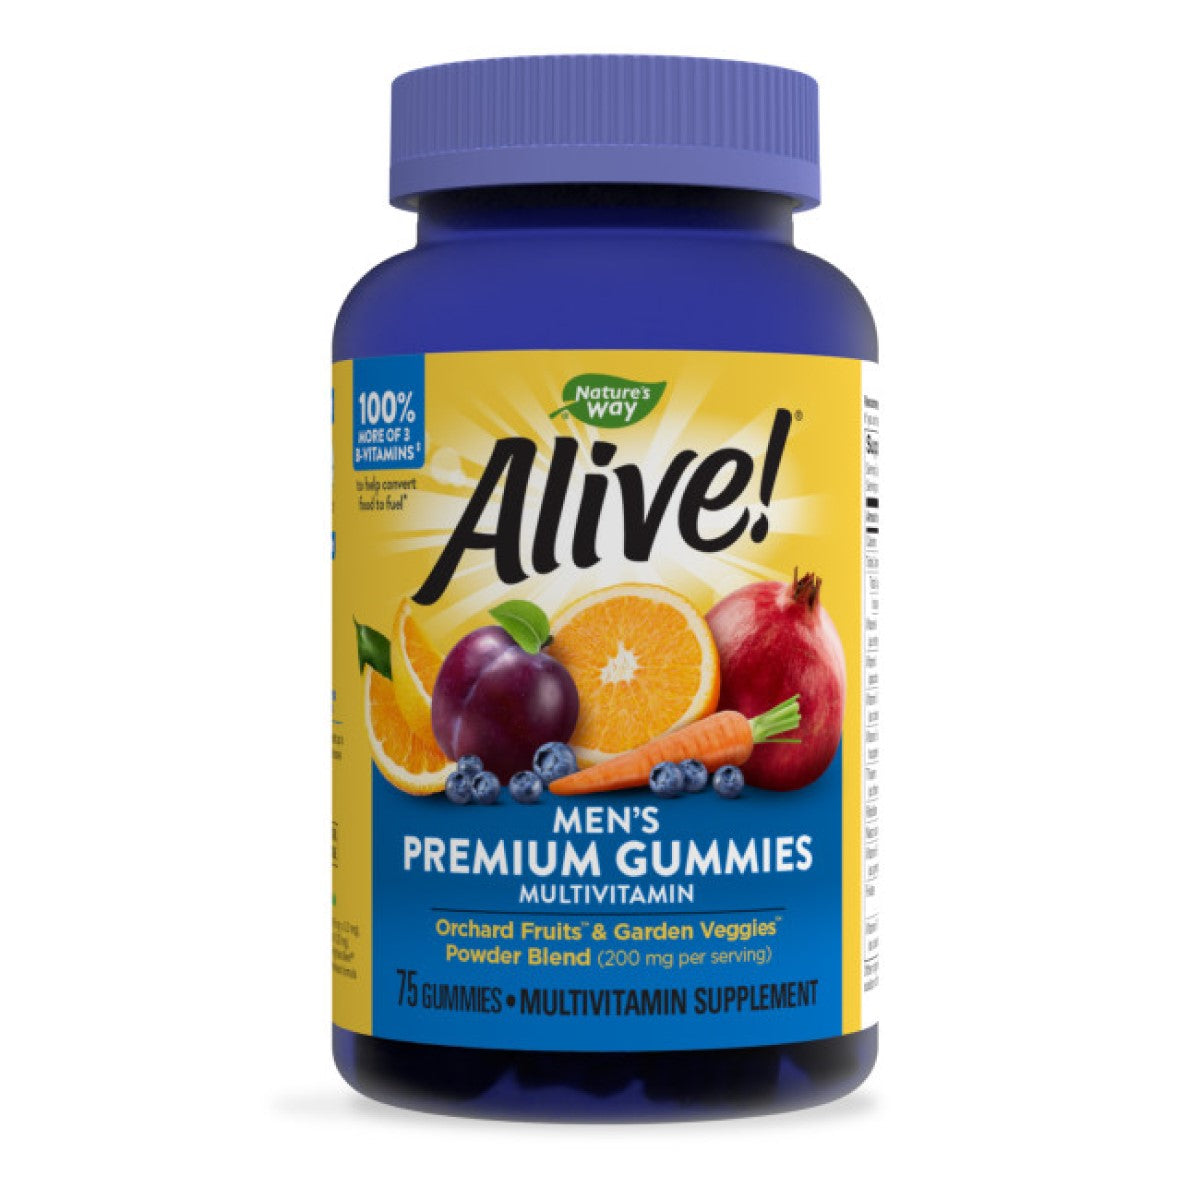 Primary image of Alive! Men's Gummy Vitamins